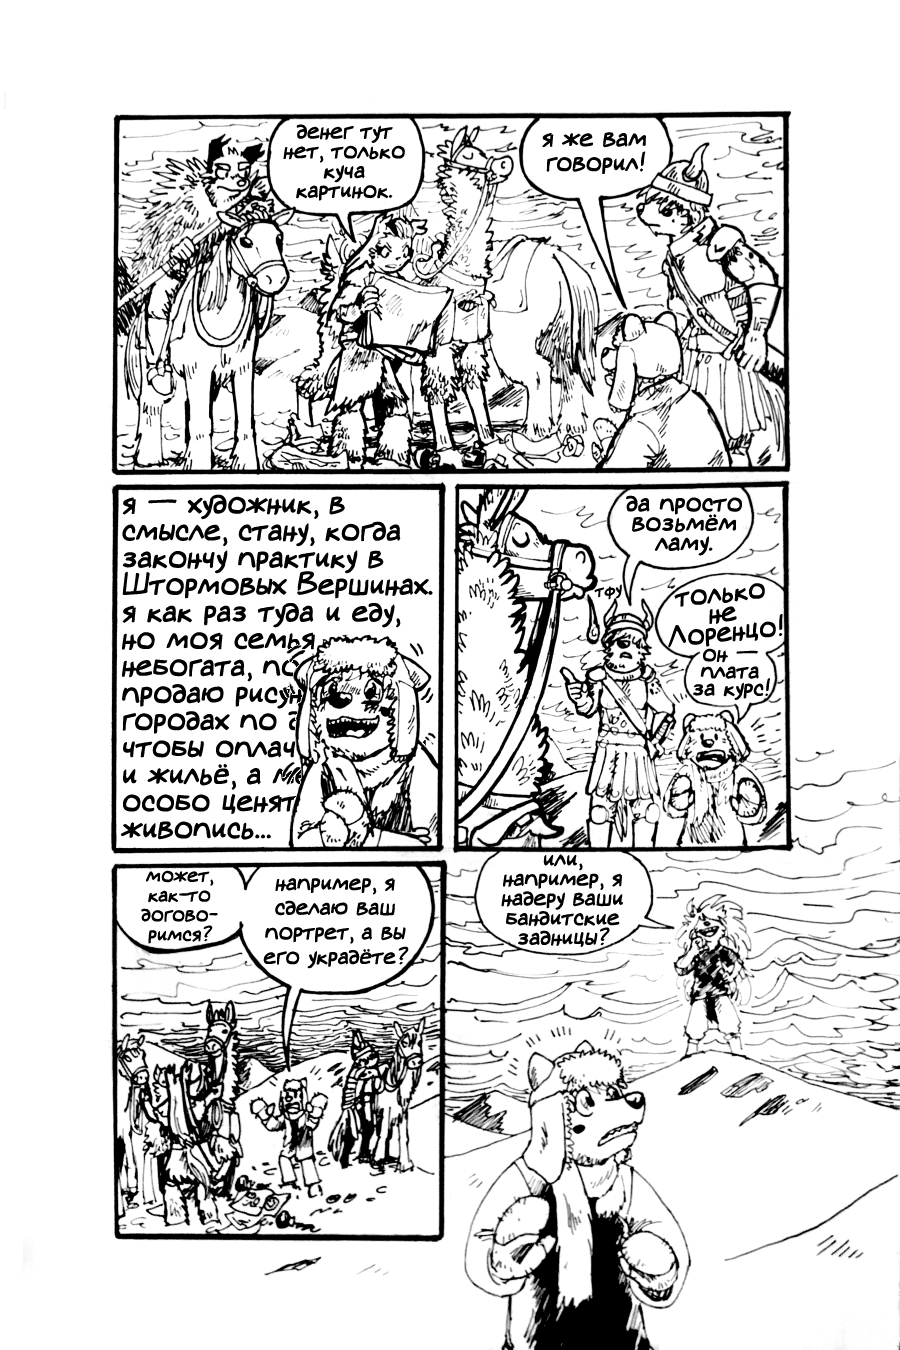 Комикс Беспризорное Царство [Latchkey Kingdom]: выпуск №409